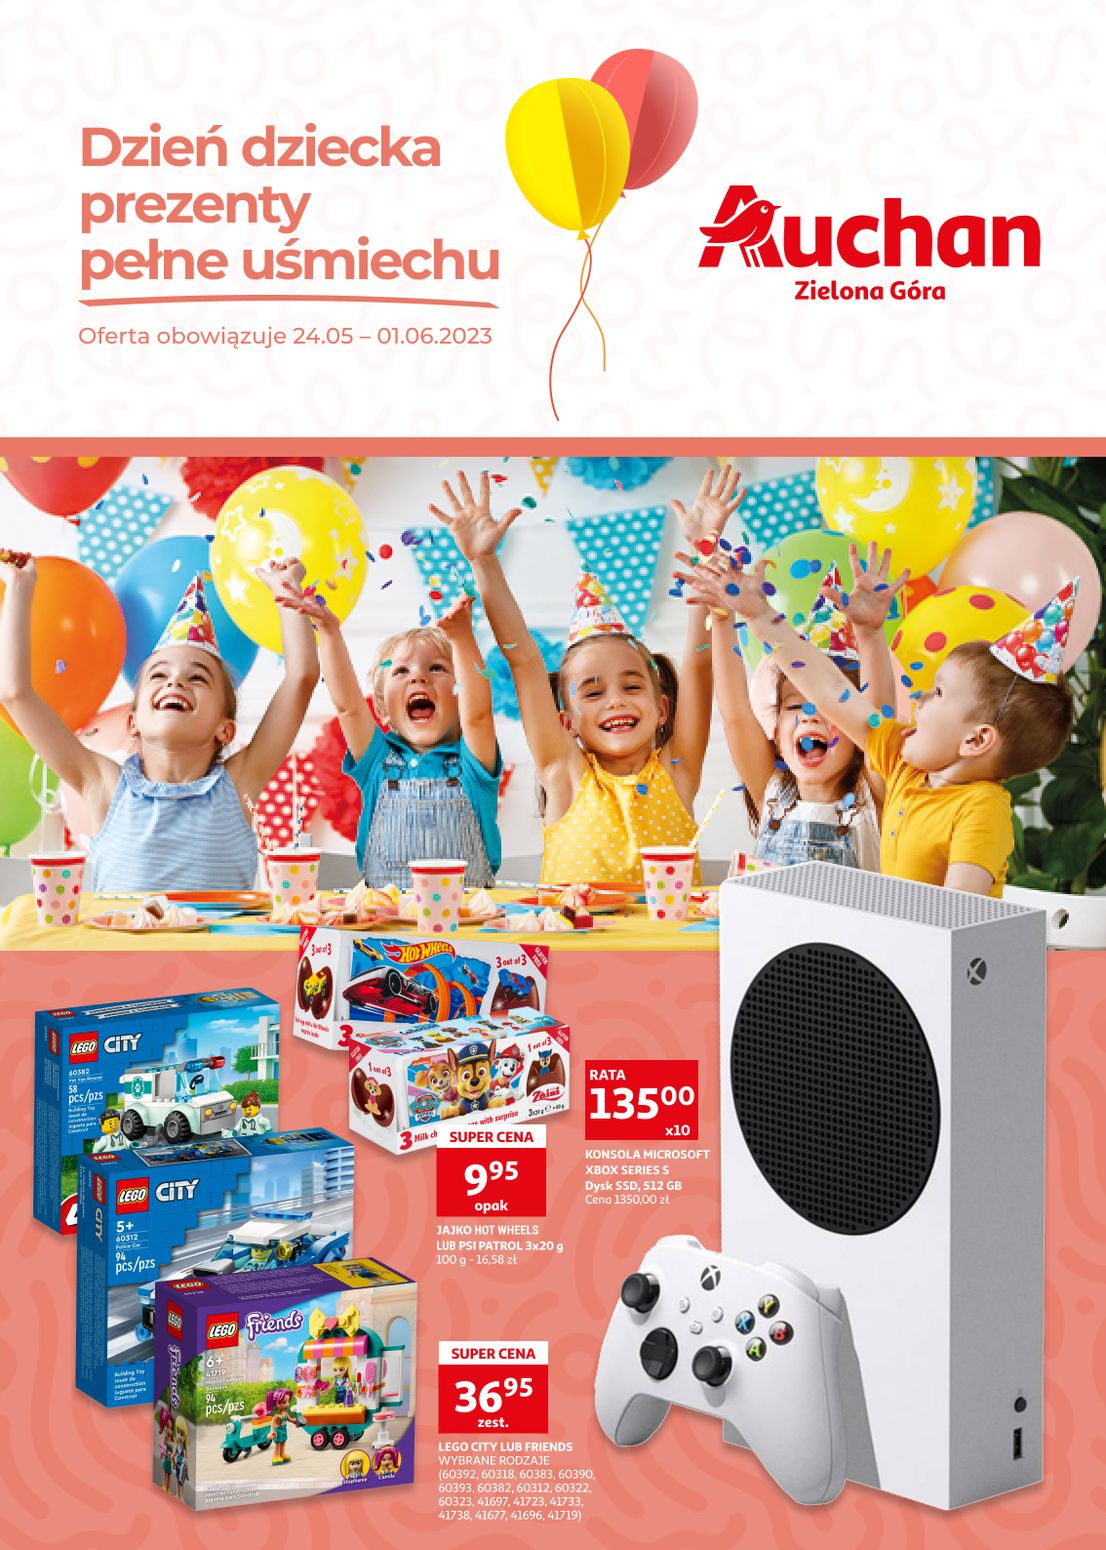 акційний каталог Auchan – Dzień dziecka - Zielona Góra - Сторінка {{page}}